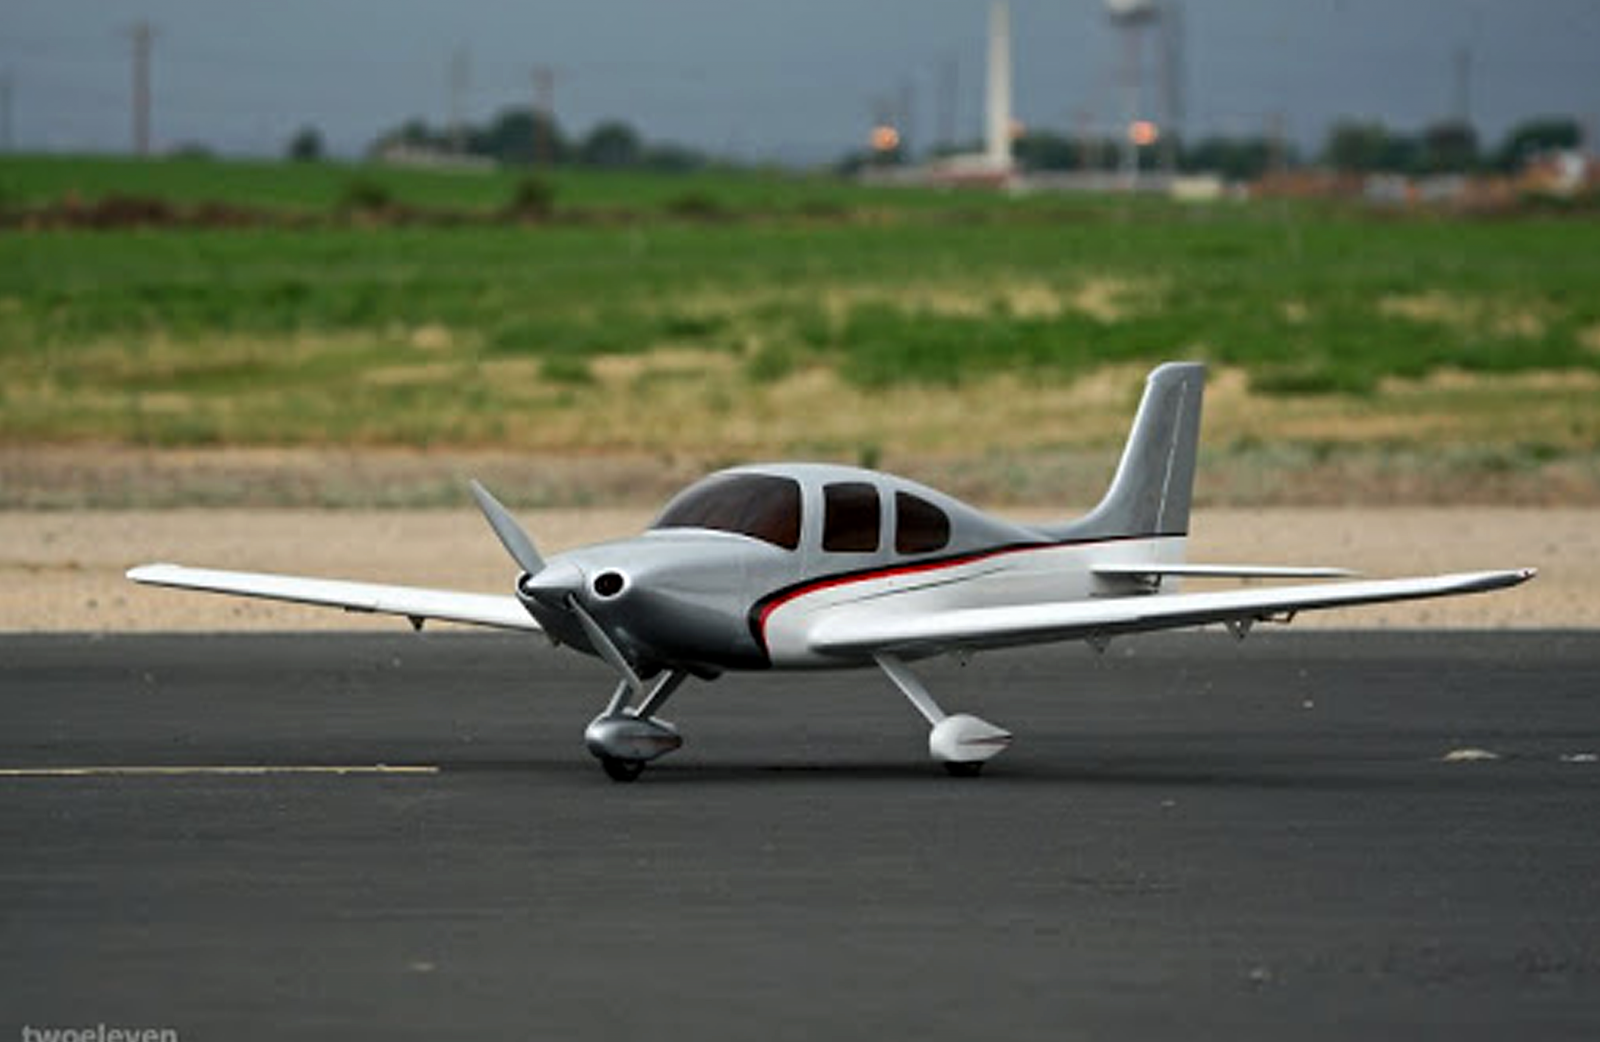 A model airplane on the runaway at Prado park airfield.